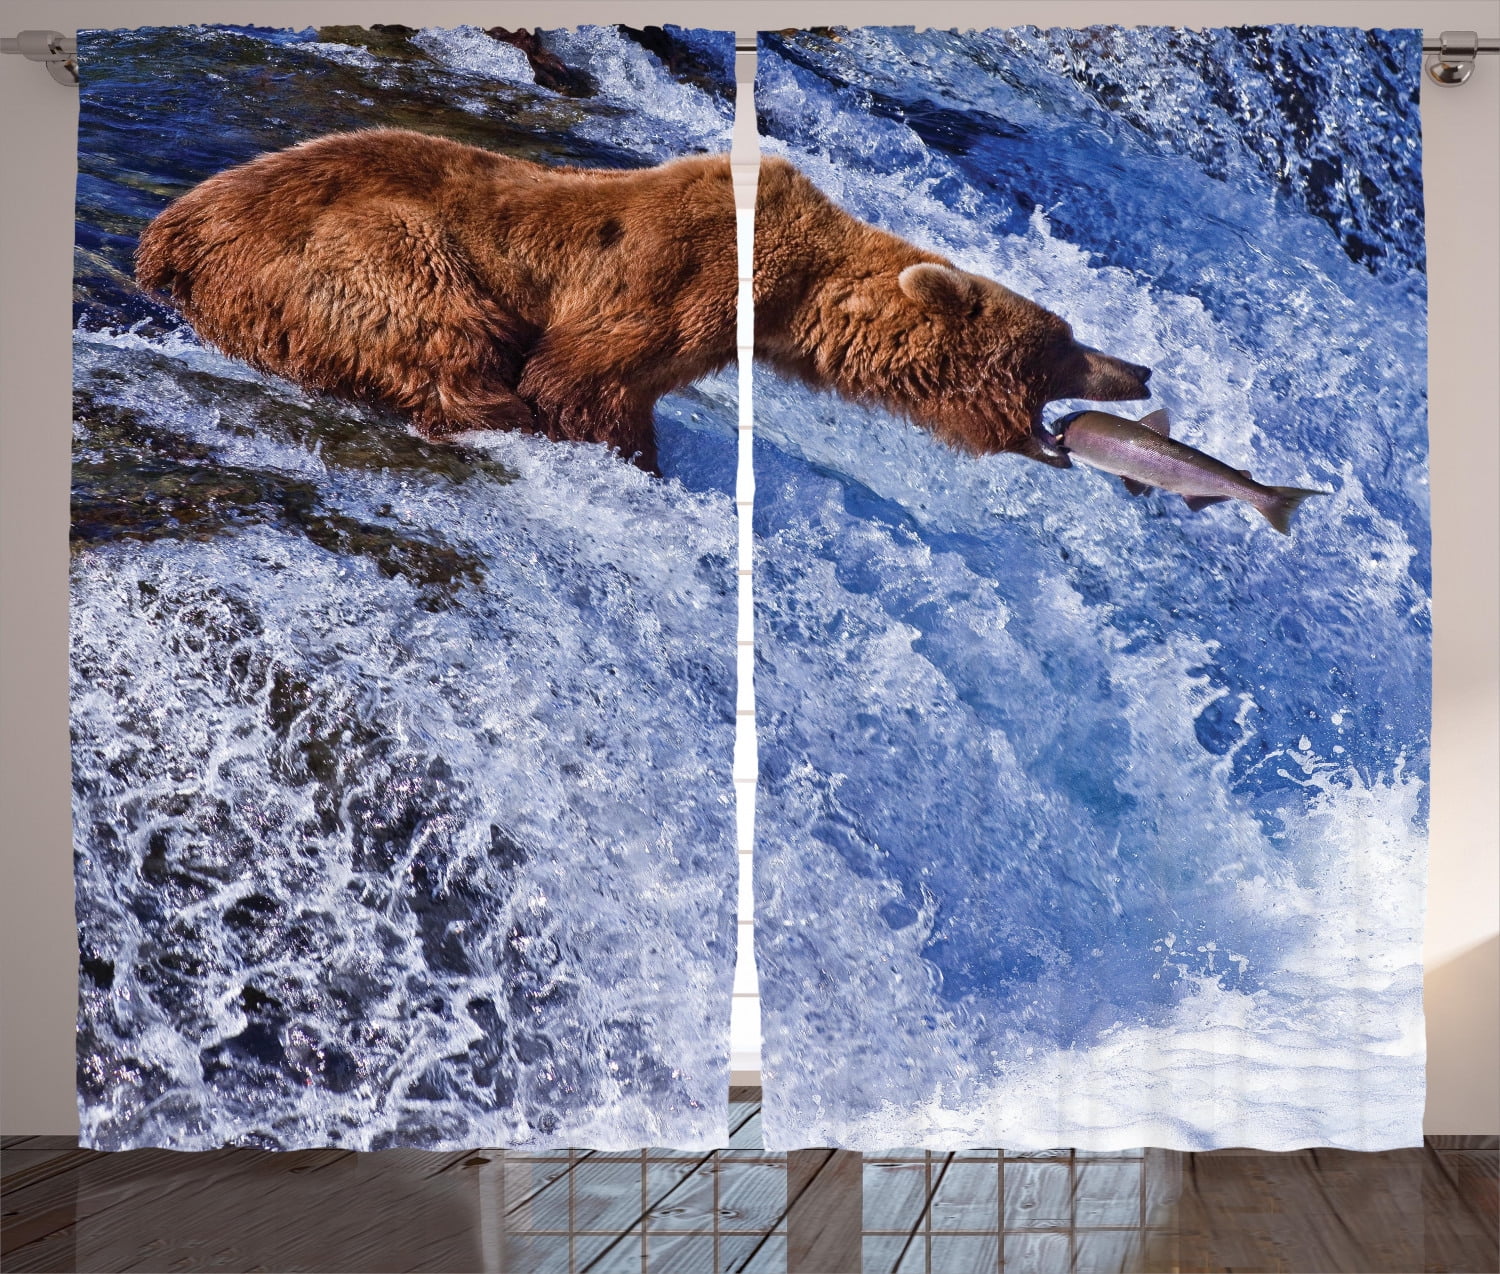 Animal Curtains Wild Bear Fish Nature Window Drapes 2 Panel Set 108x84 Inches 